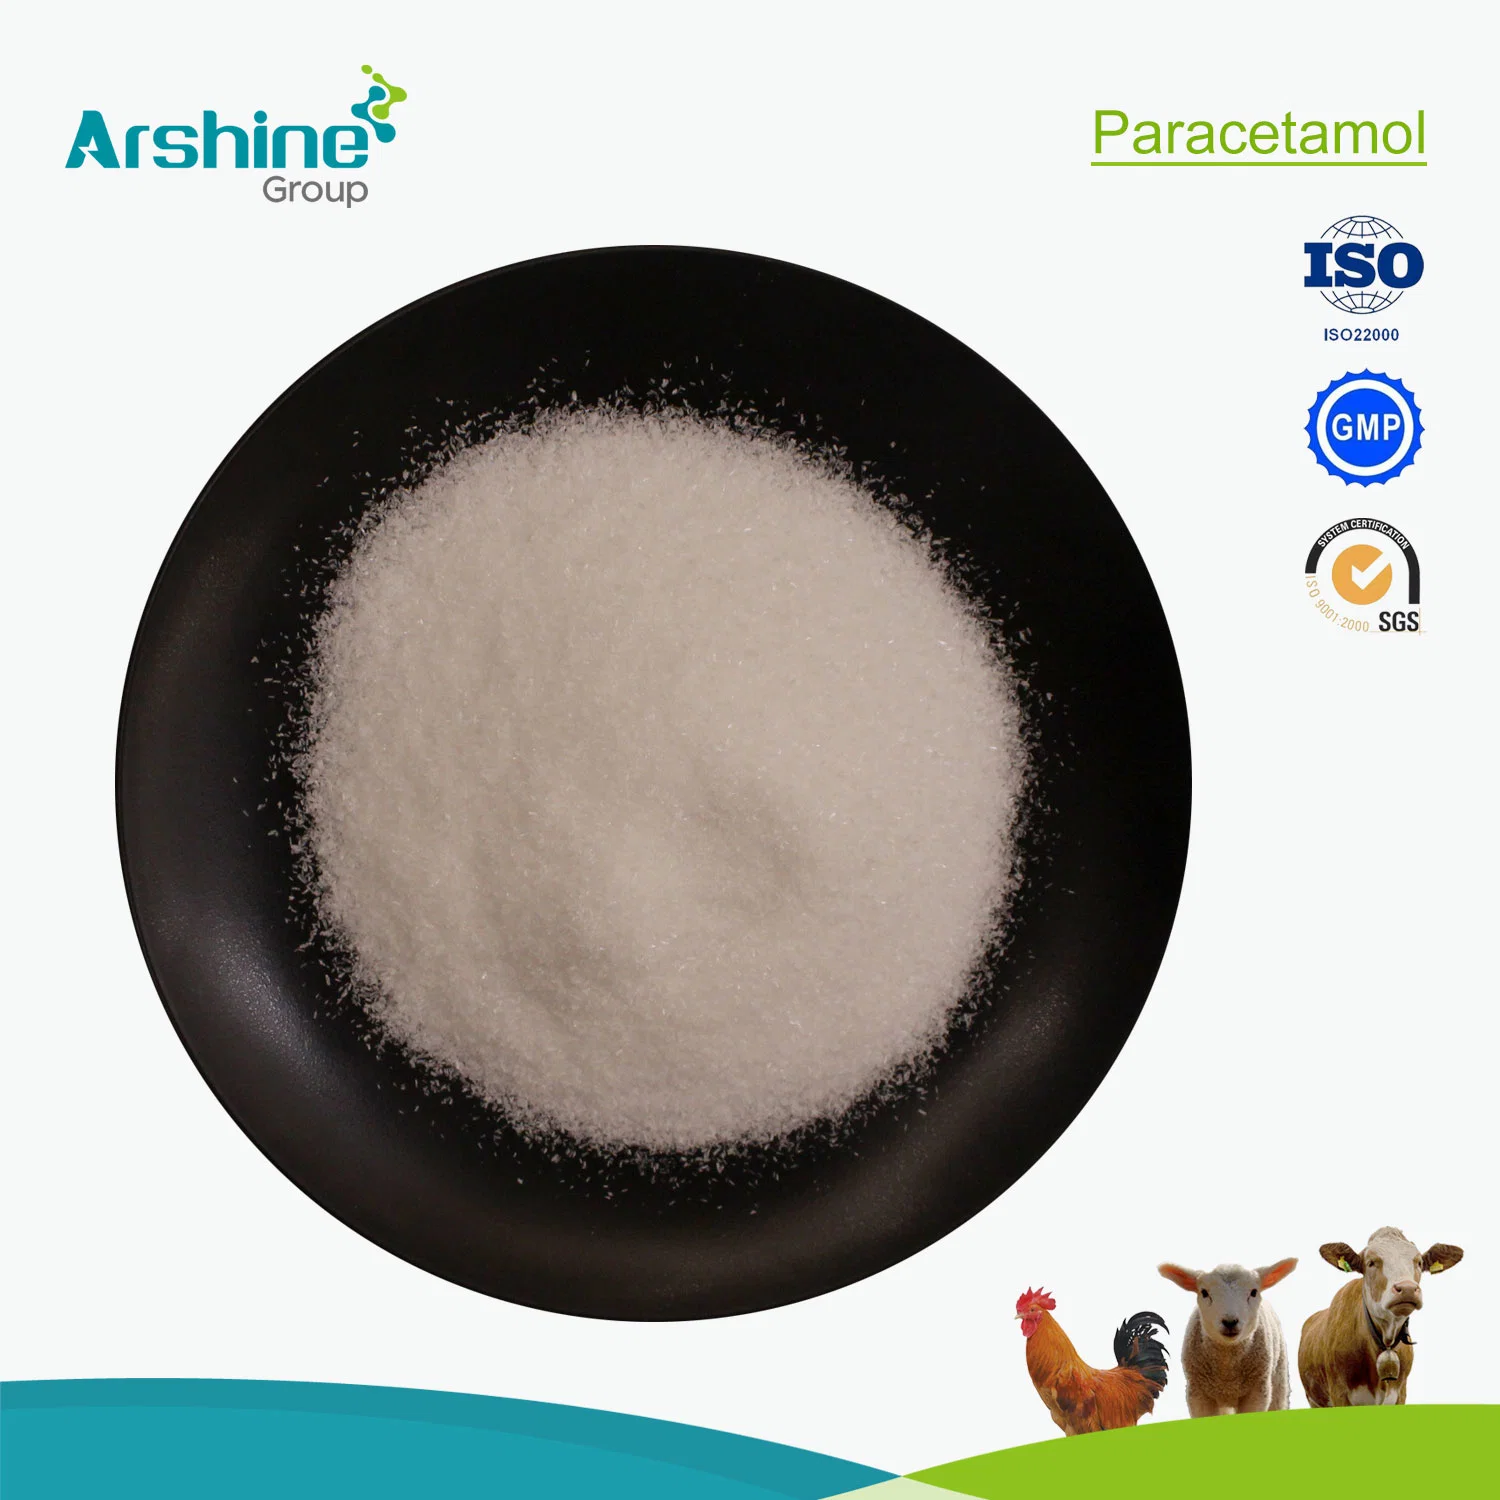 99% Purity Pharmaceutical Raw Material CAS103-90-2 Acetaminophen Powder Paracetamol